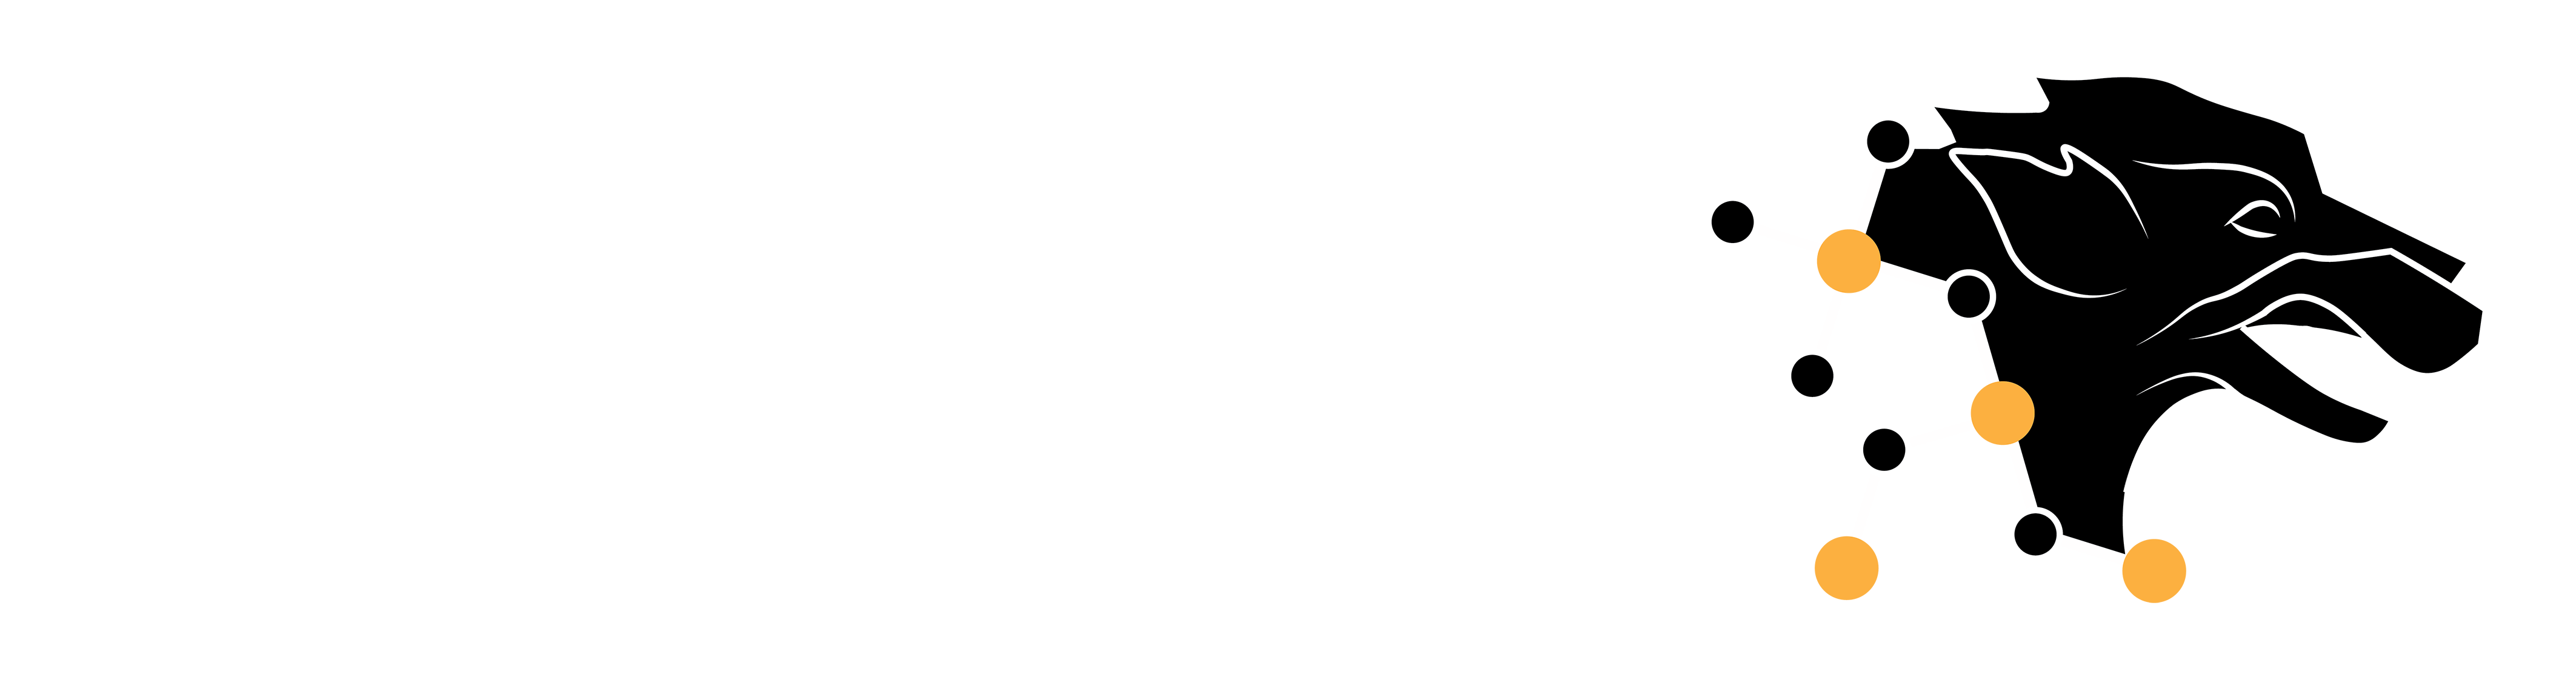 Blackwolf Copper and Gold LTD